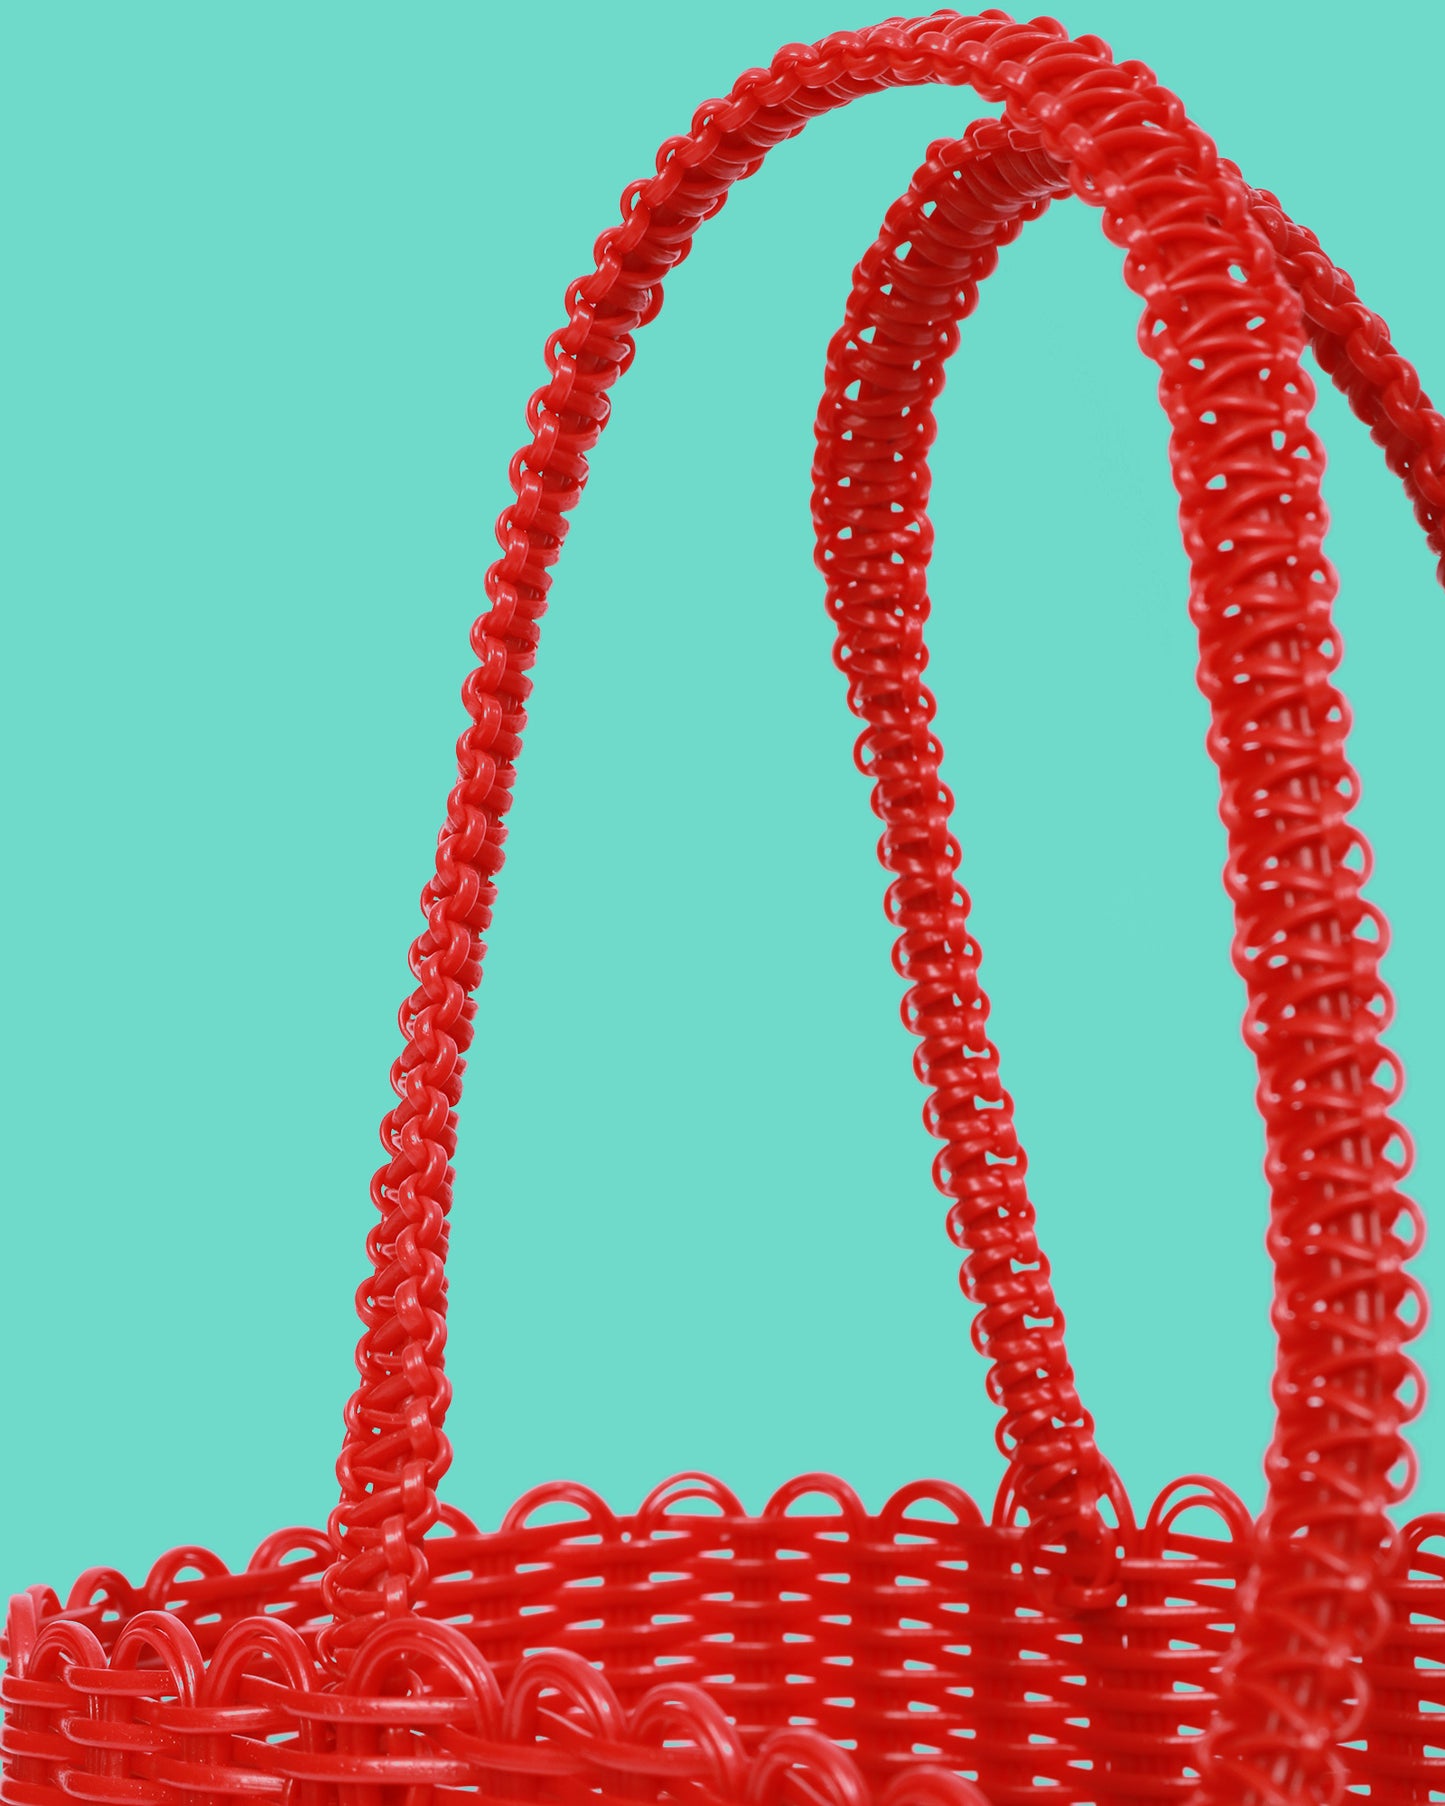 Fair Trade Plastic Basket, Red